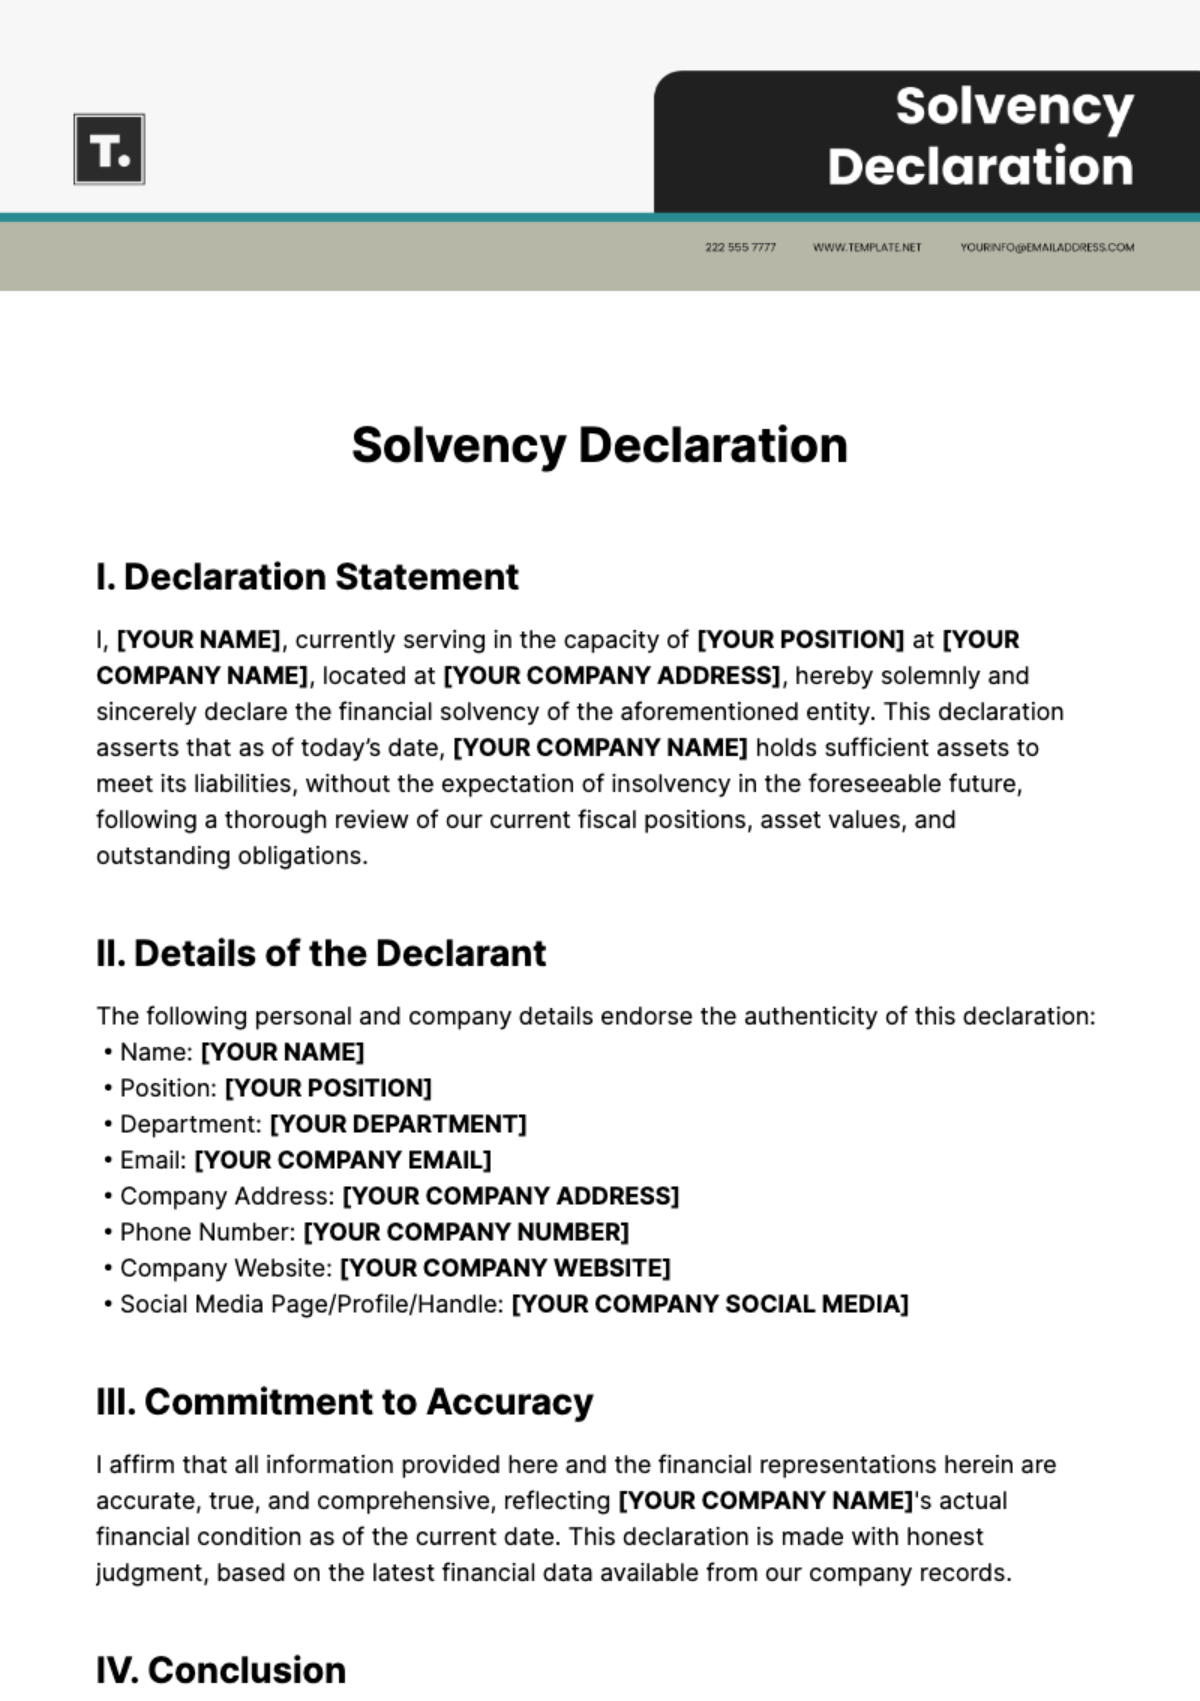 Solvency Declaration Template